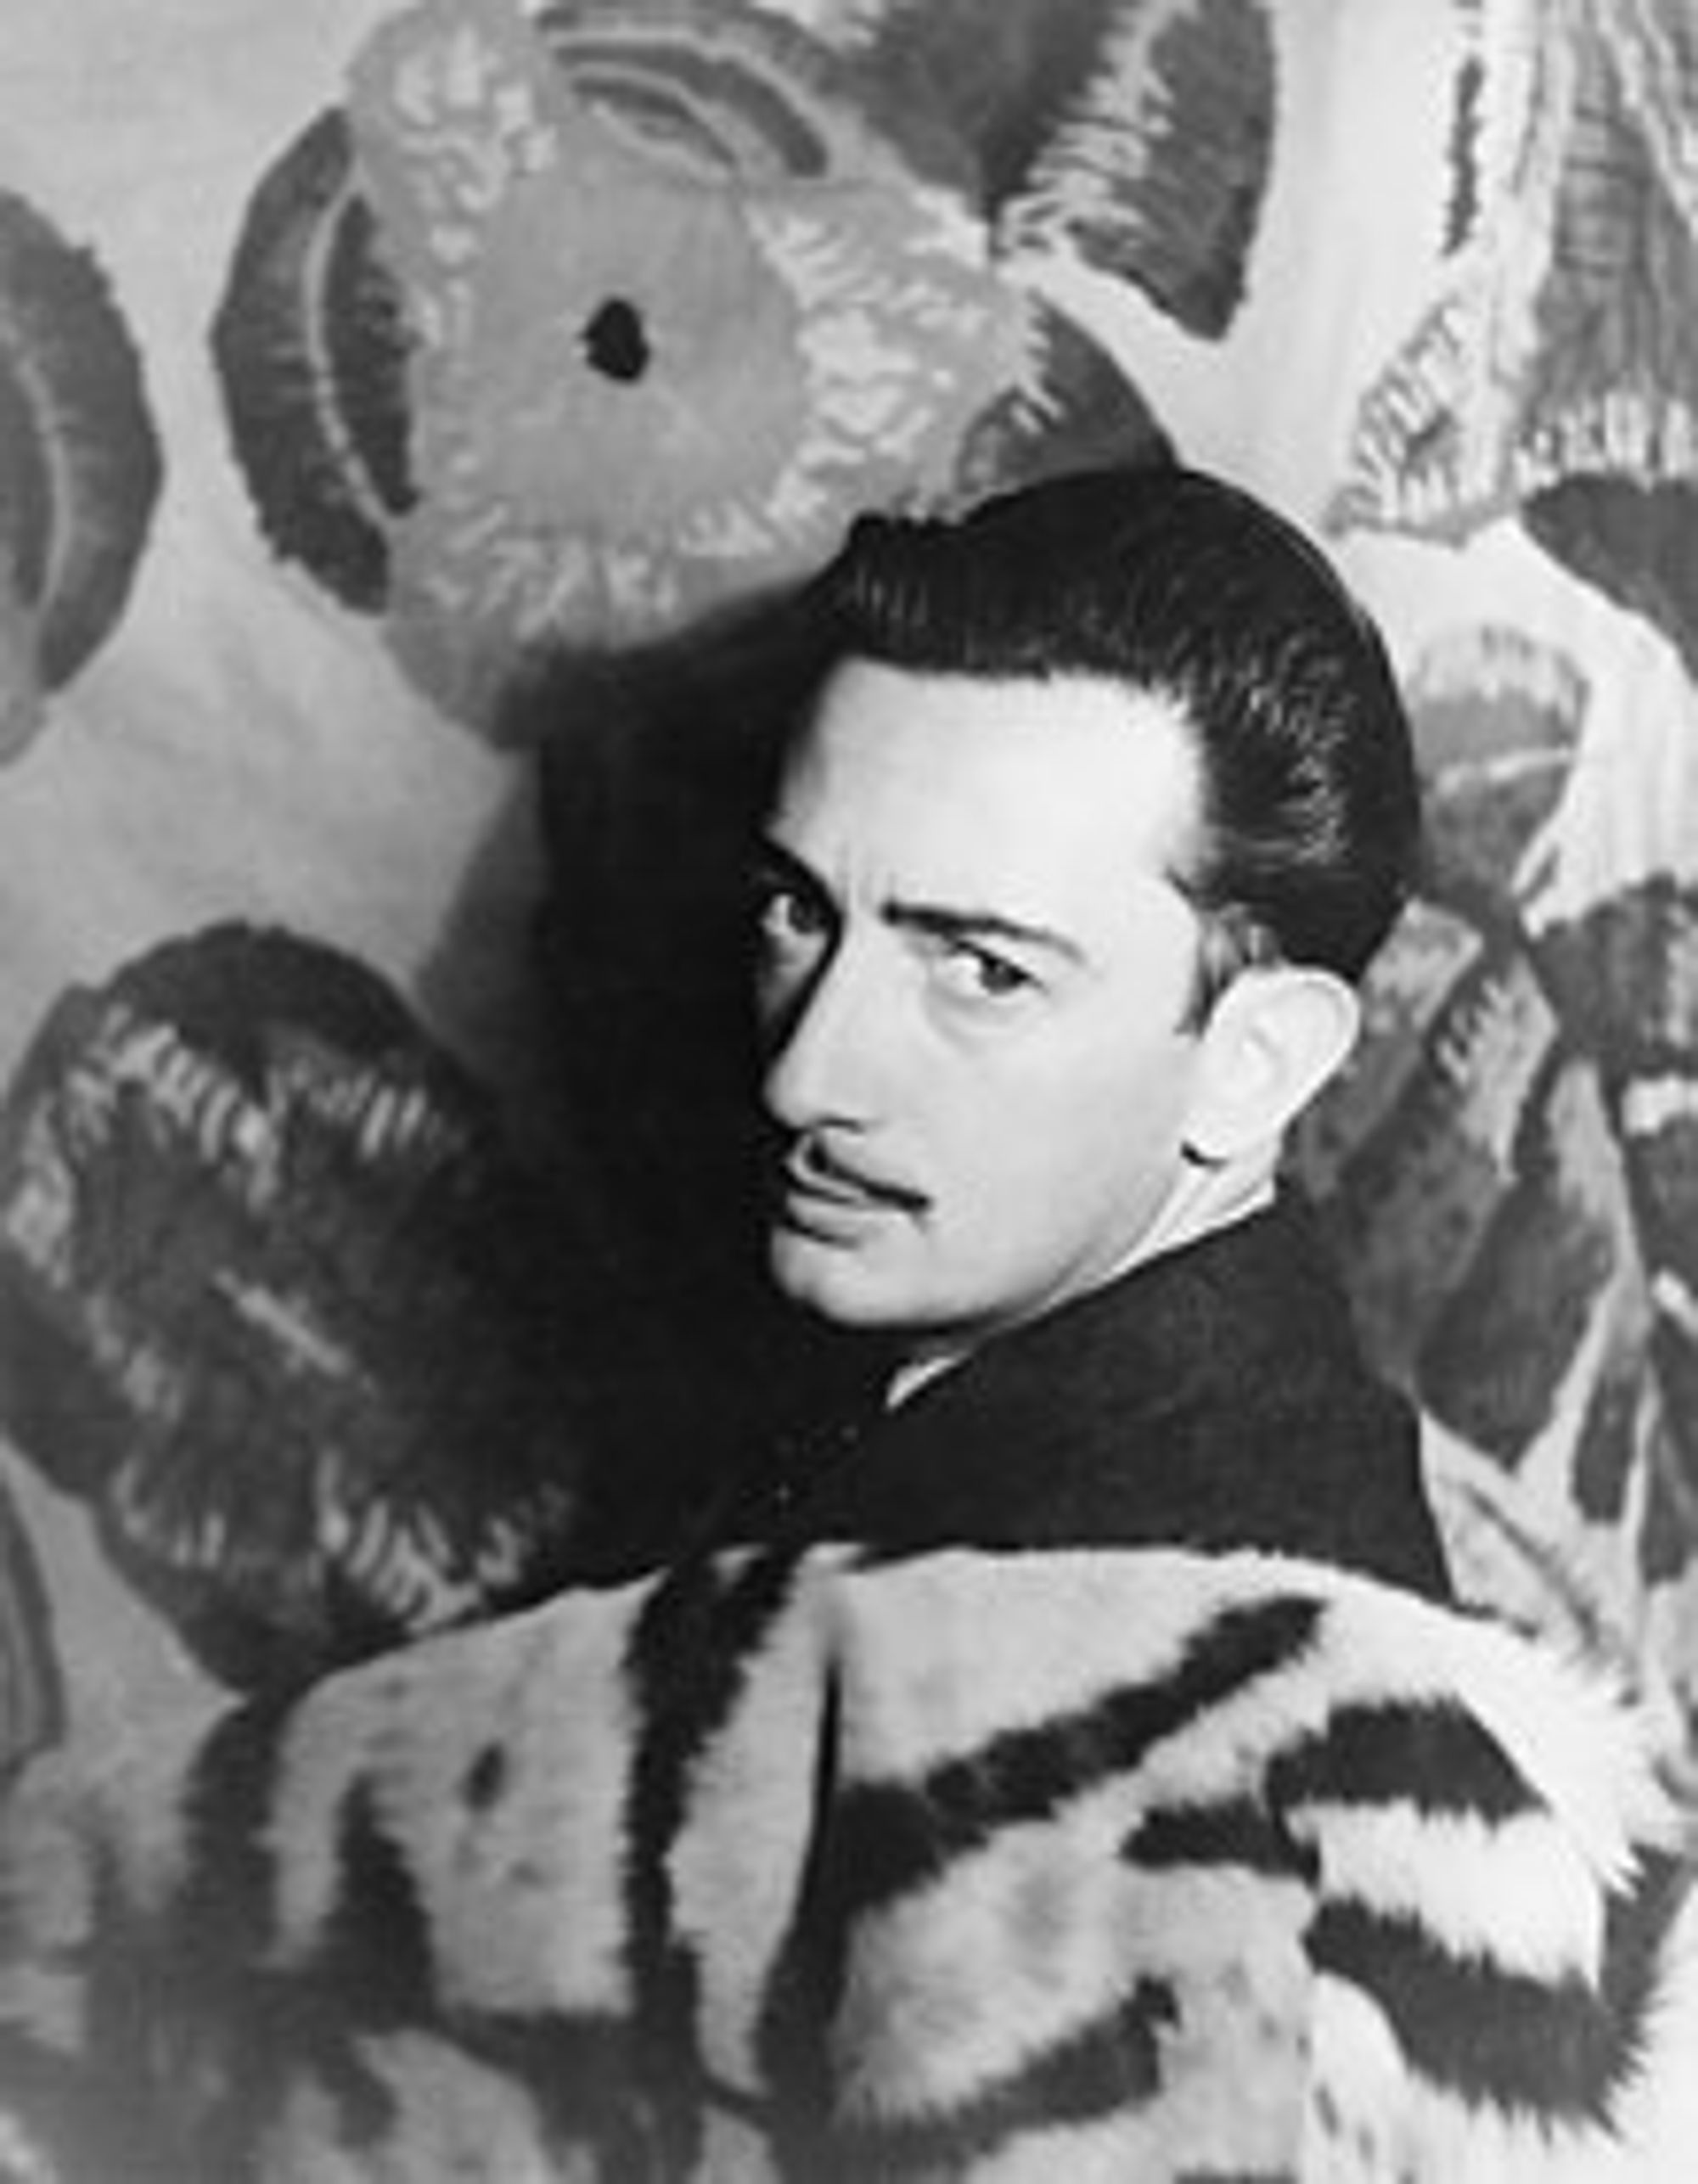 Salvador Dalí - Wikipedia